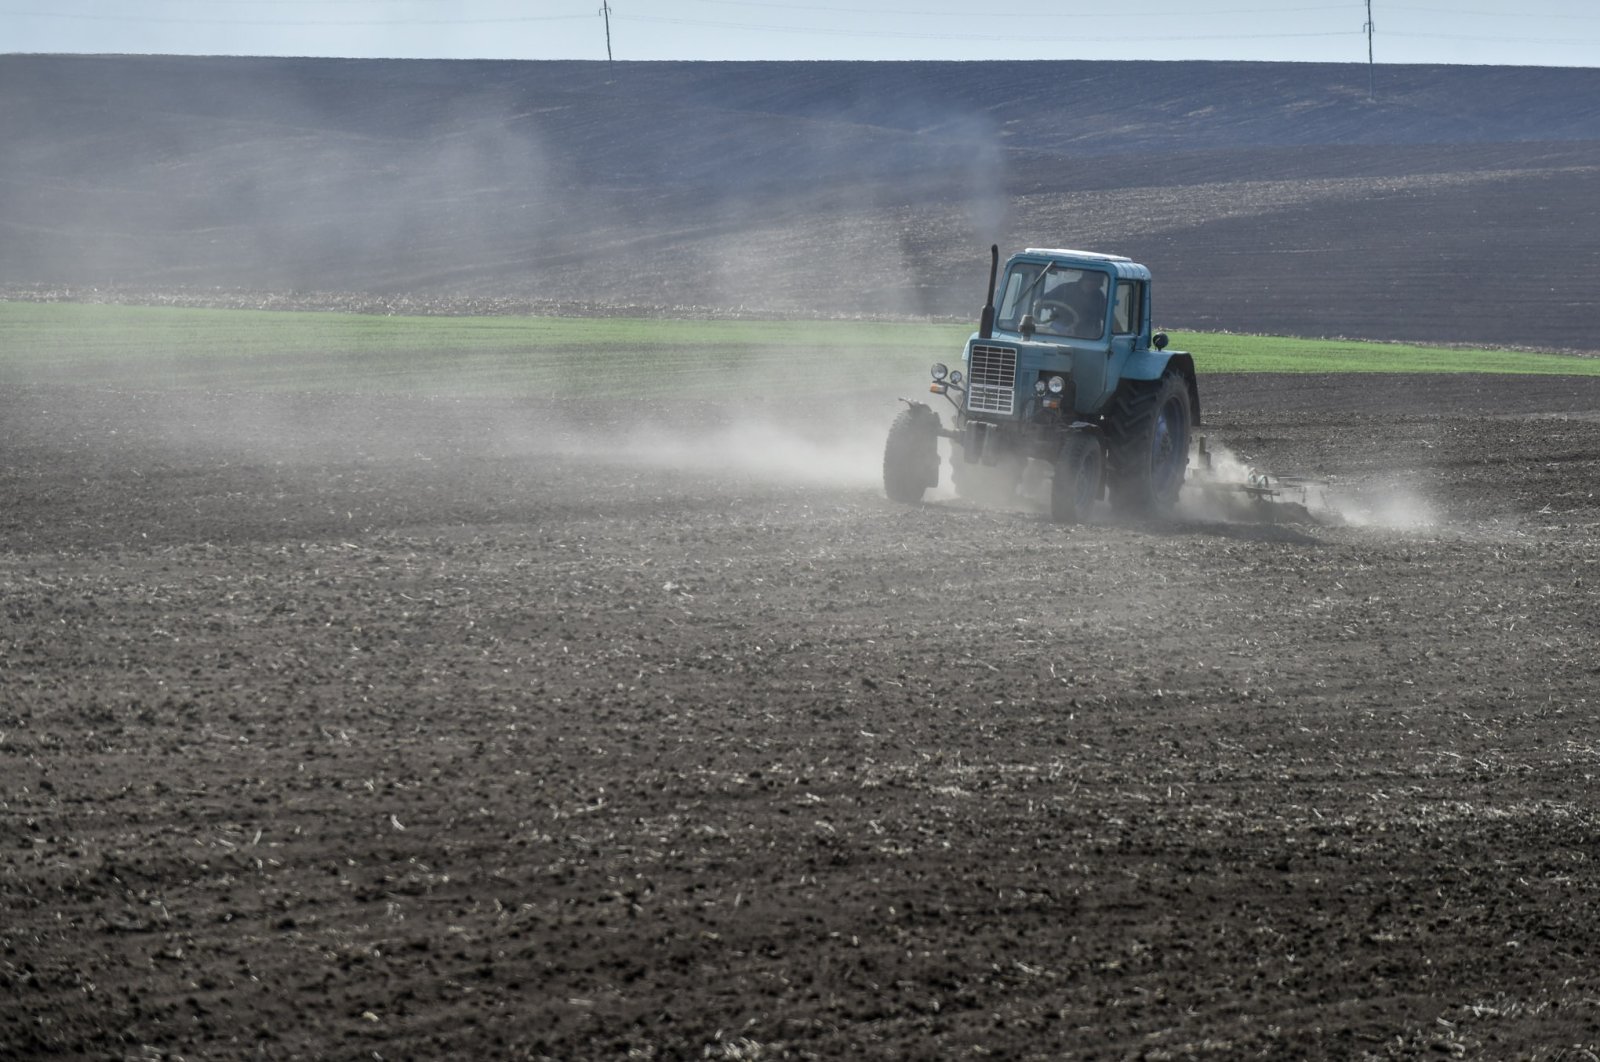 A farmer drives a tractor on a field in the Khmelnytsky region, Ukraine, May 2, 2022. (EPA Photo)